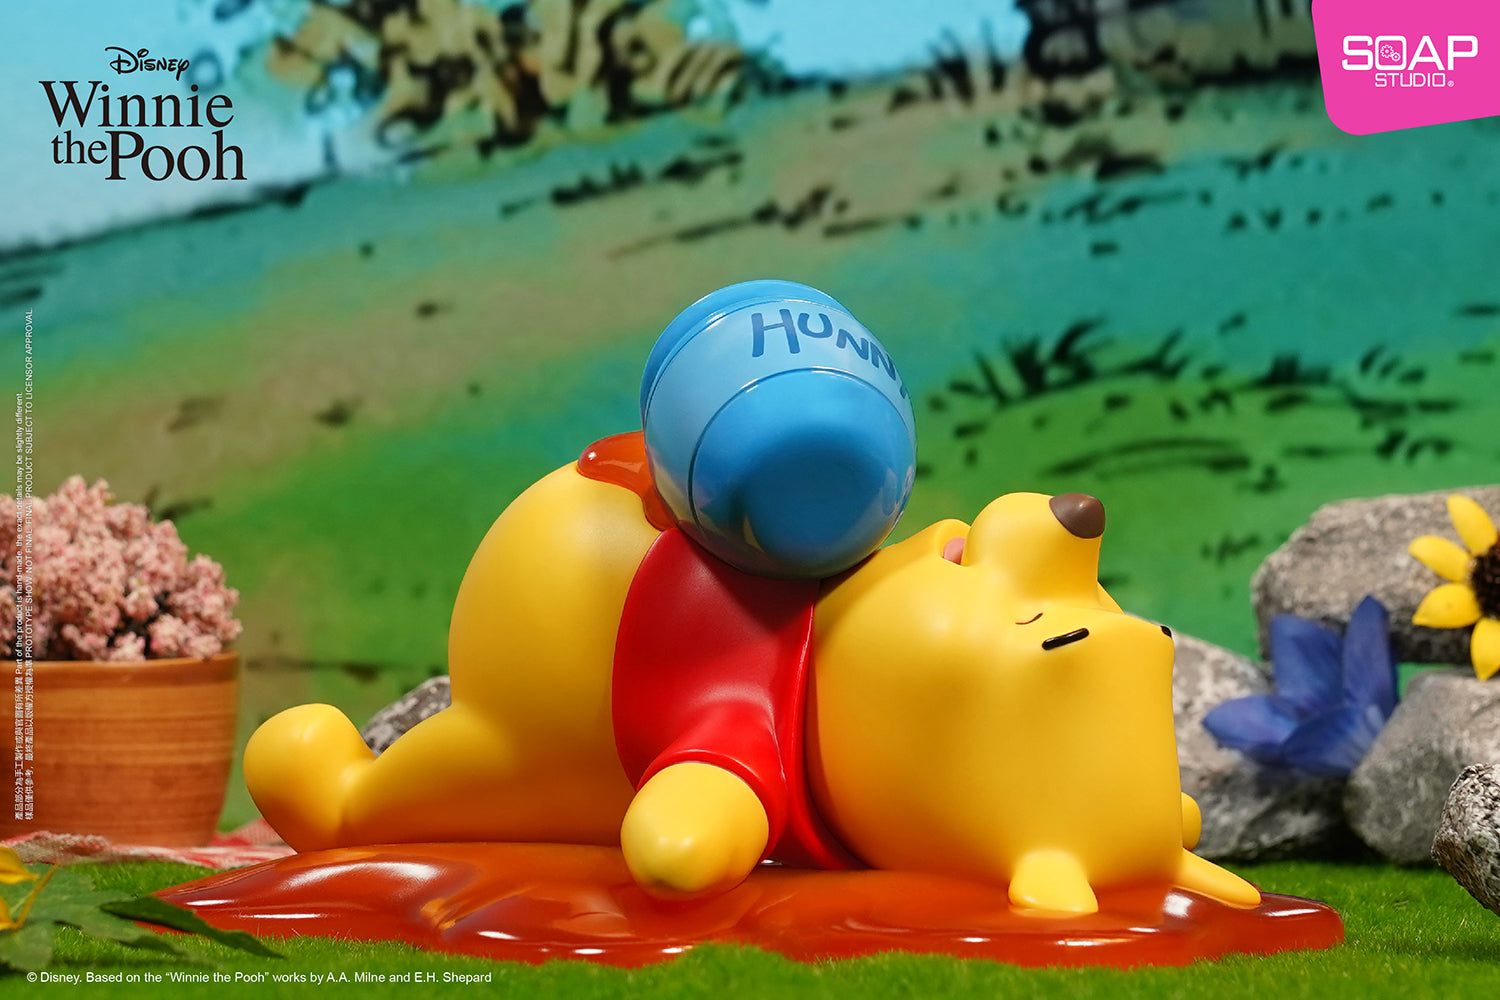 Soap Studio DY058 Winnie the Pooh Honey-bath Figure